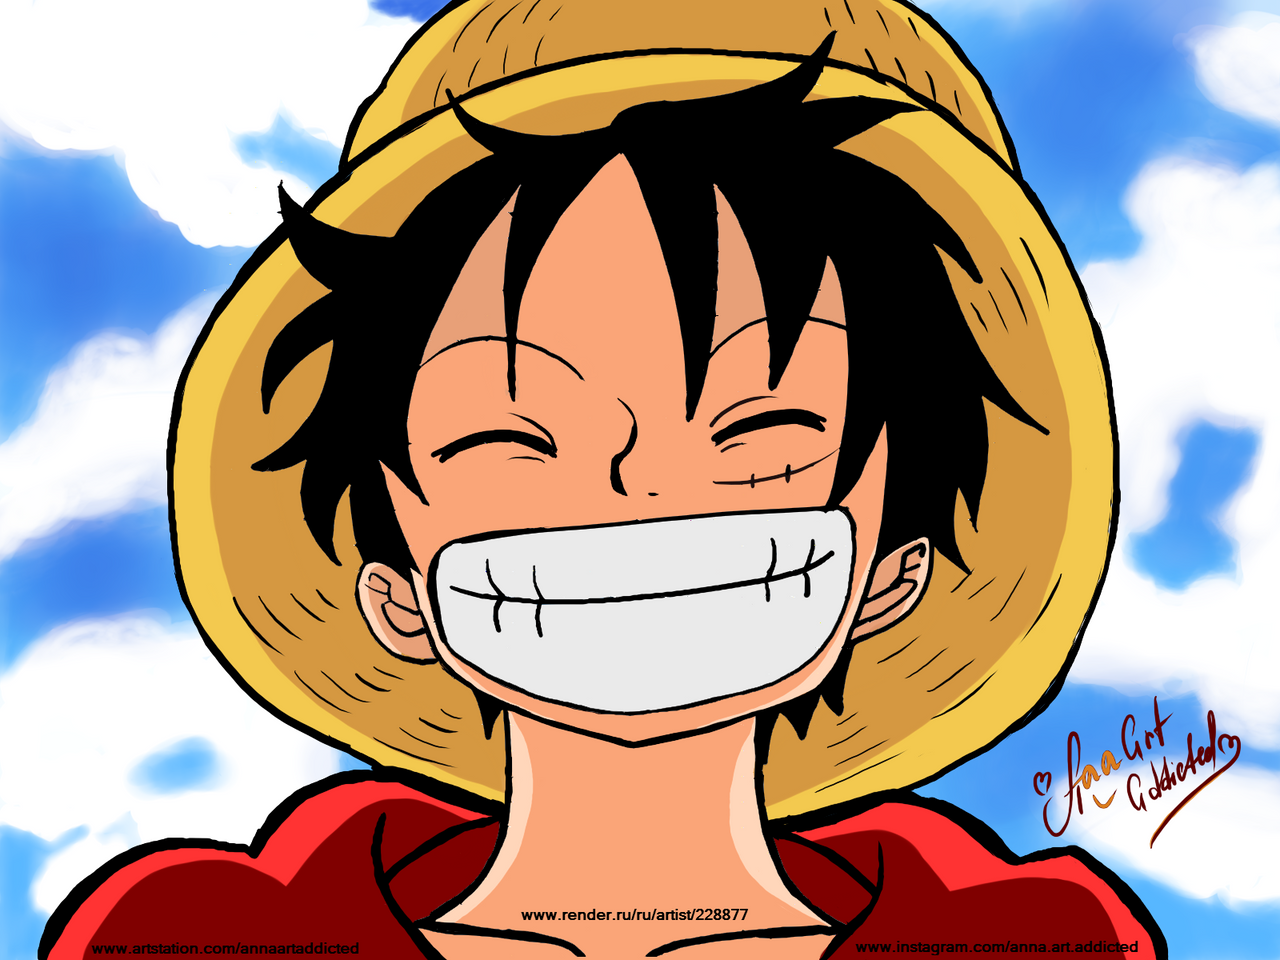 One Piece: Monkey D. Luffy 